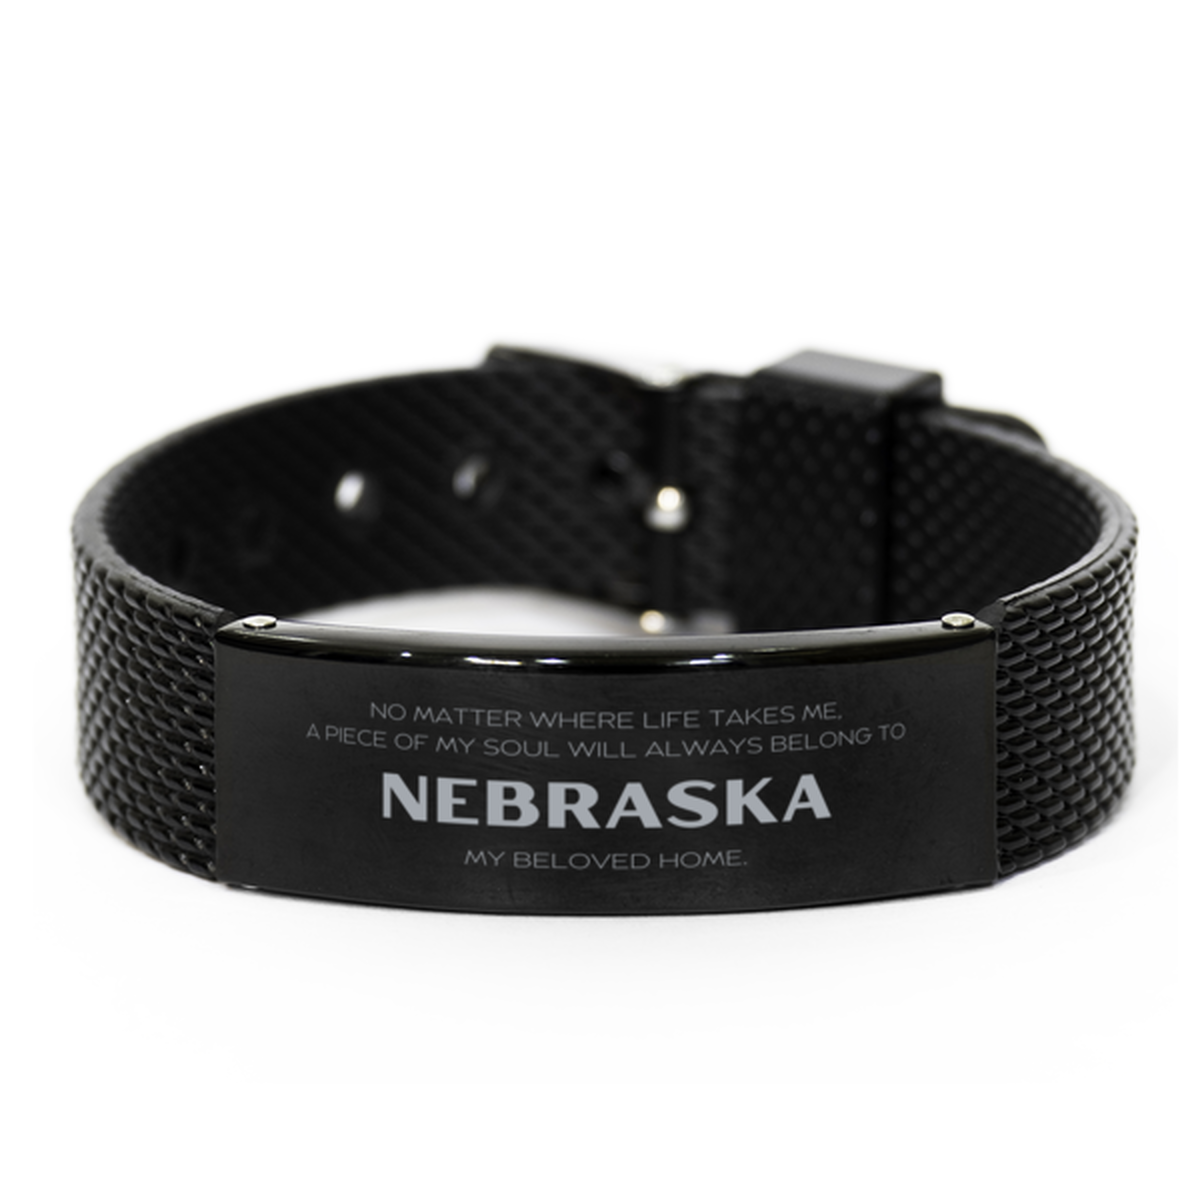 Love Nebraska State Gifts, My soul will always belong to Nebraska, Proud Black Shark Mesh Bracelet, Birthday Unique Gifts For Nebraska Men, Women, Friends